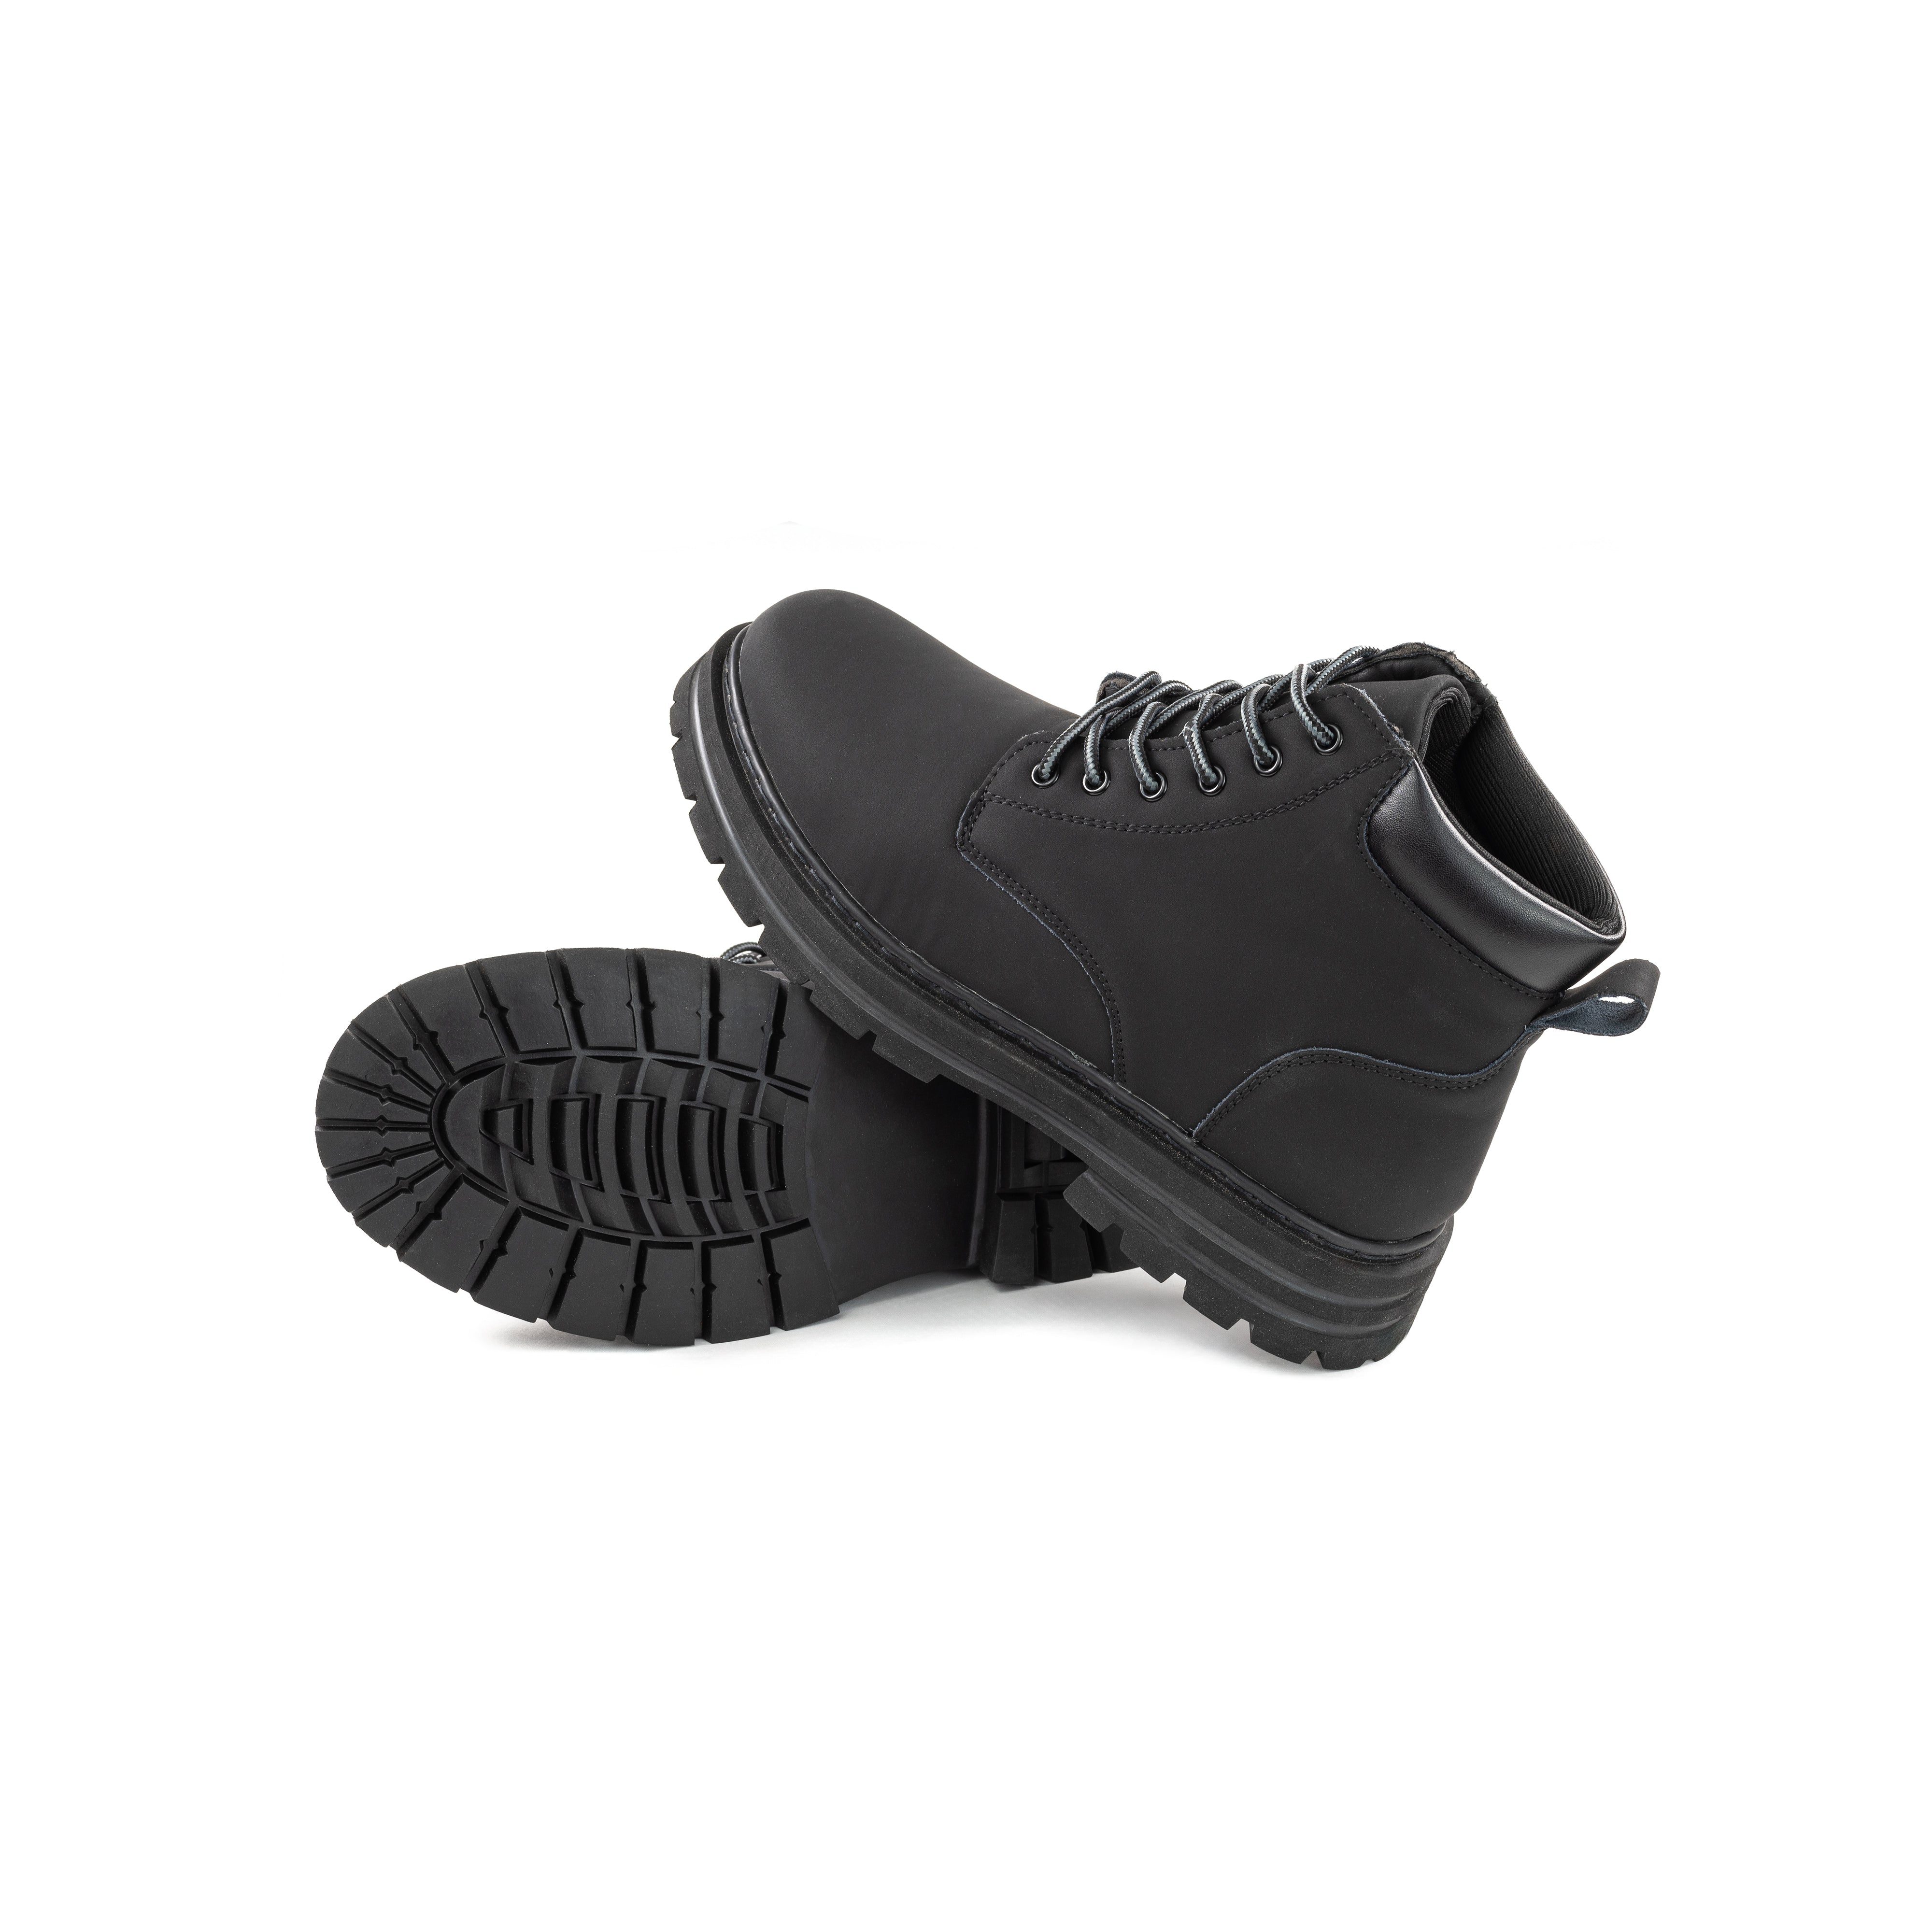 Mulat Black Winter Boots 